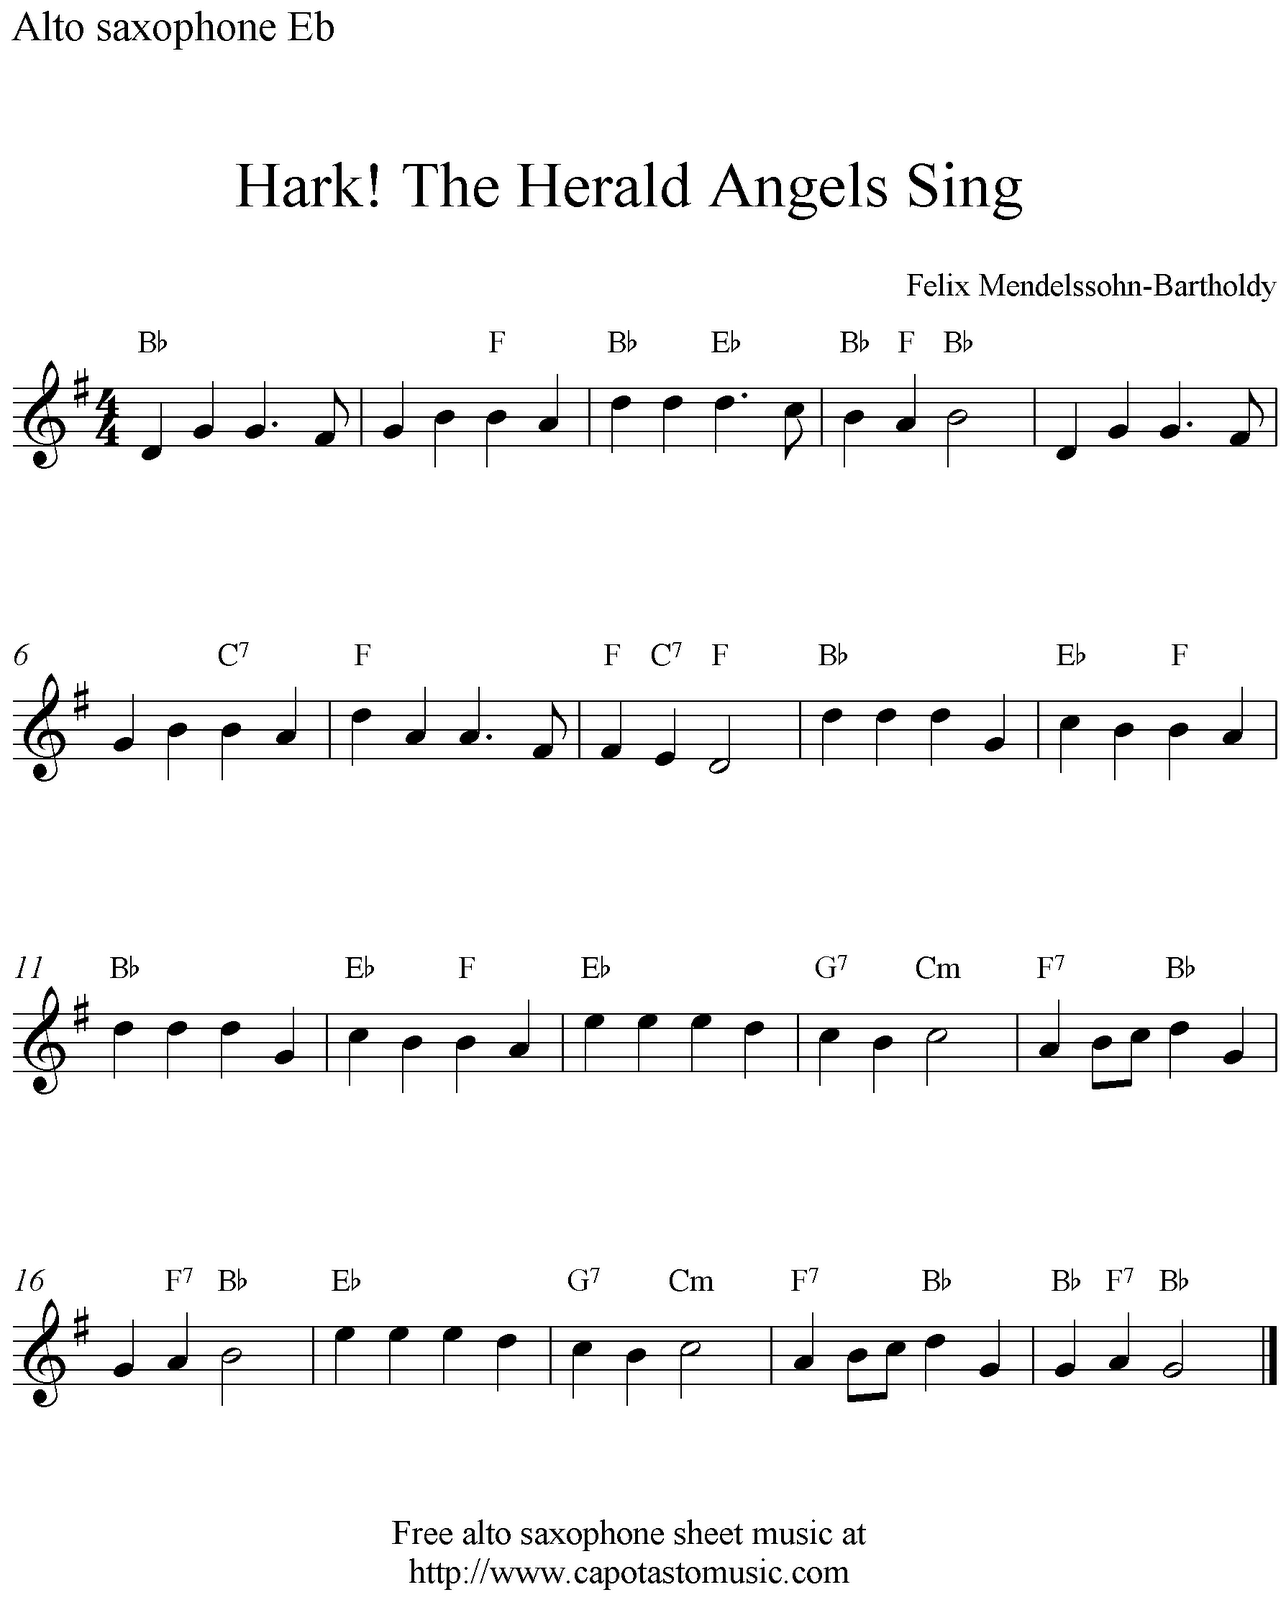 hark-the-herald-angels-sing-free-christmas-alto-saxophone-sheet-music